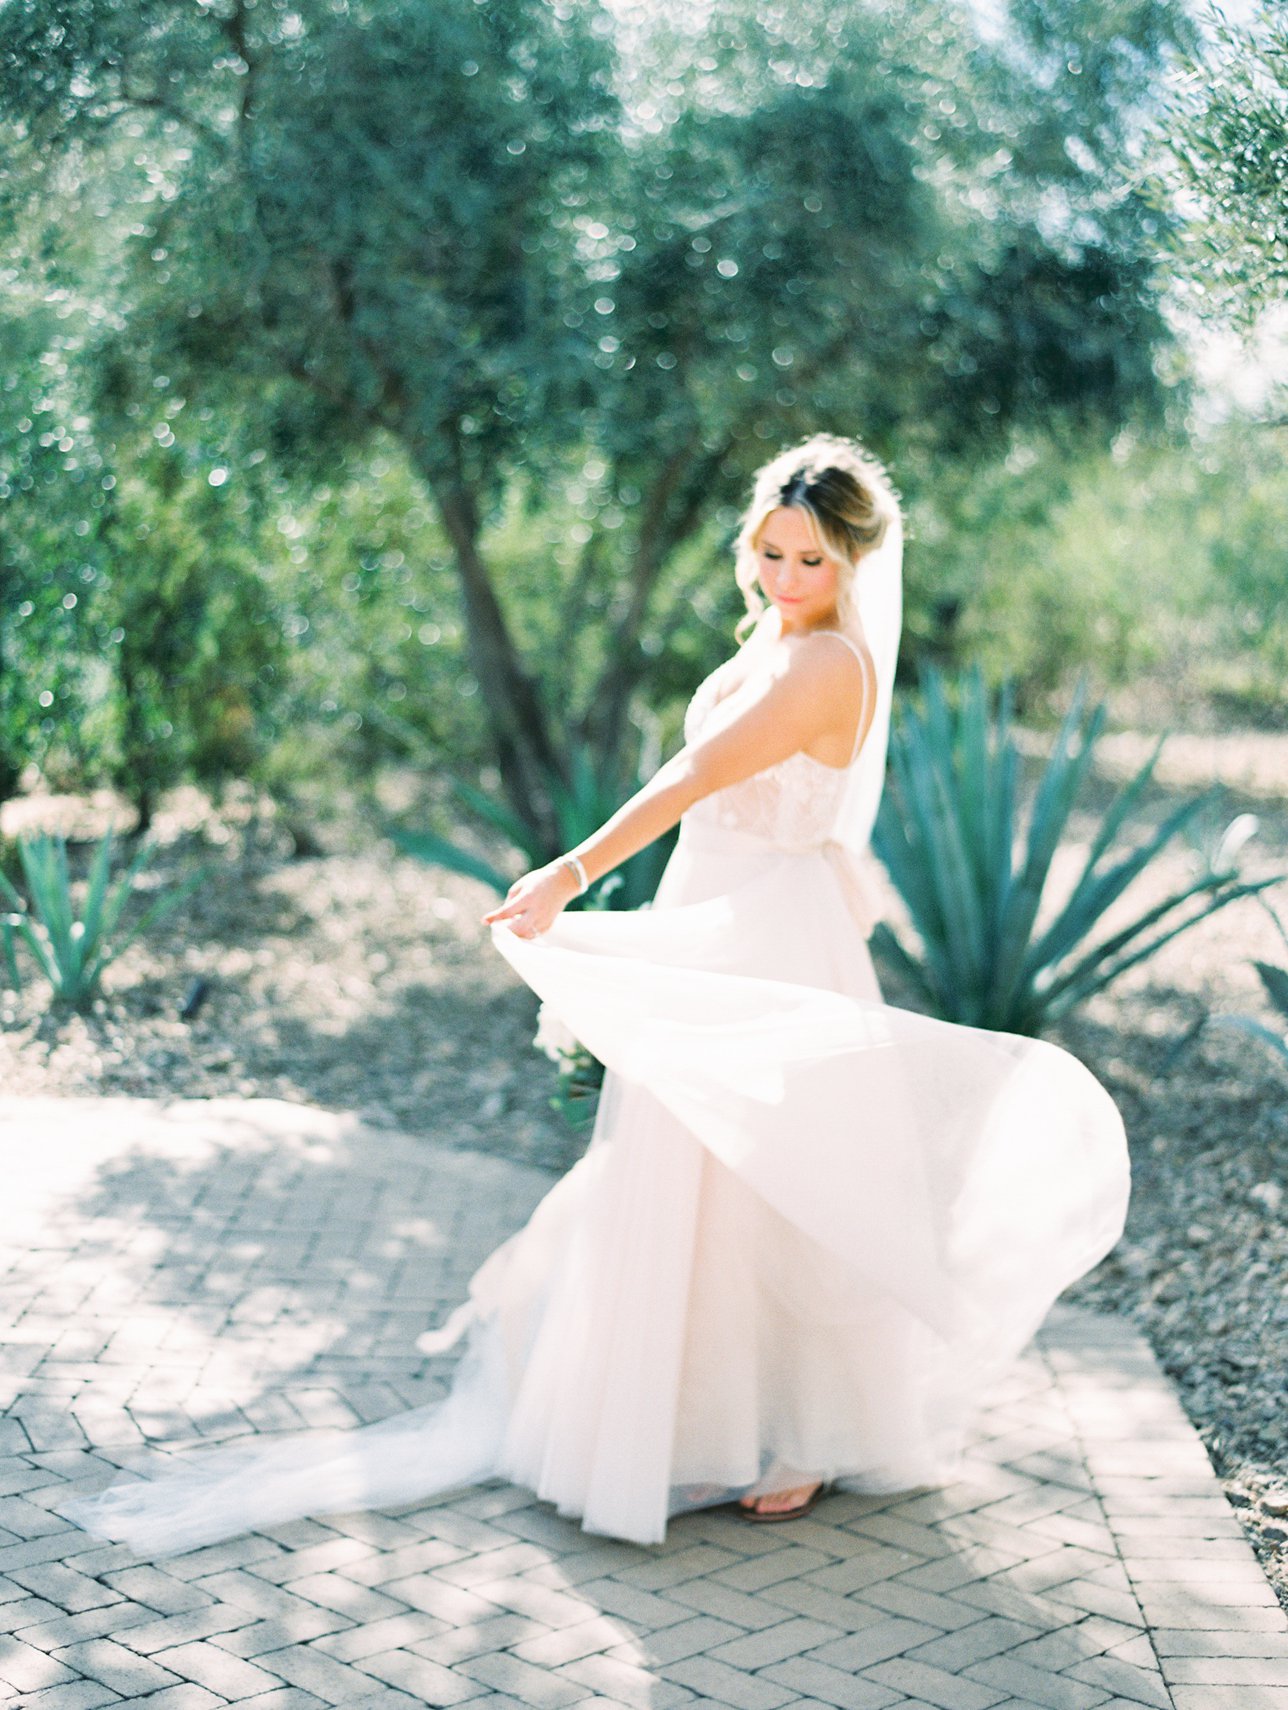 El Chorro Wedding Photos - Rachel Solomon Photography